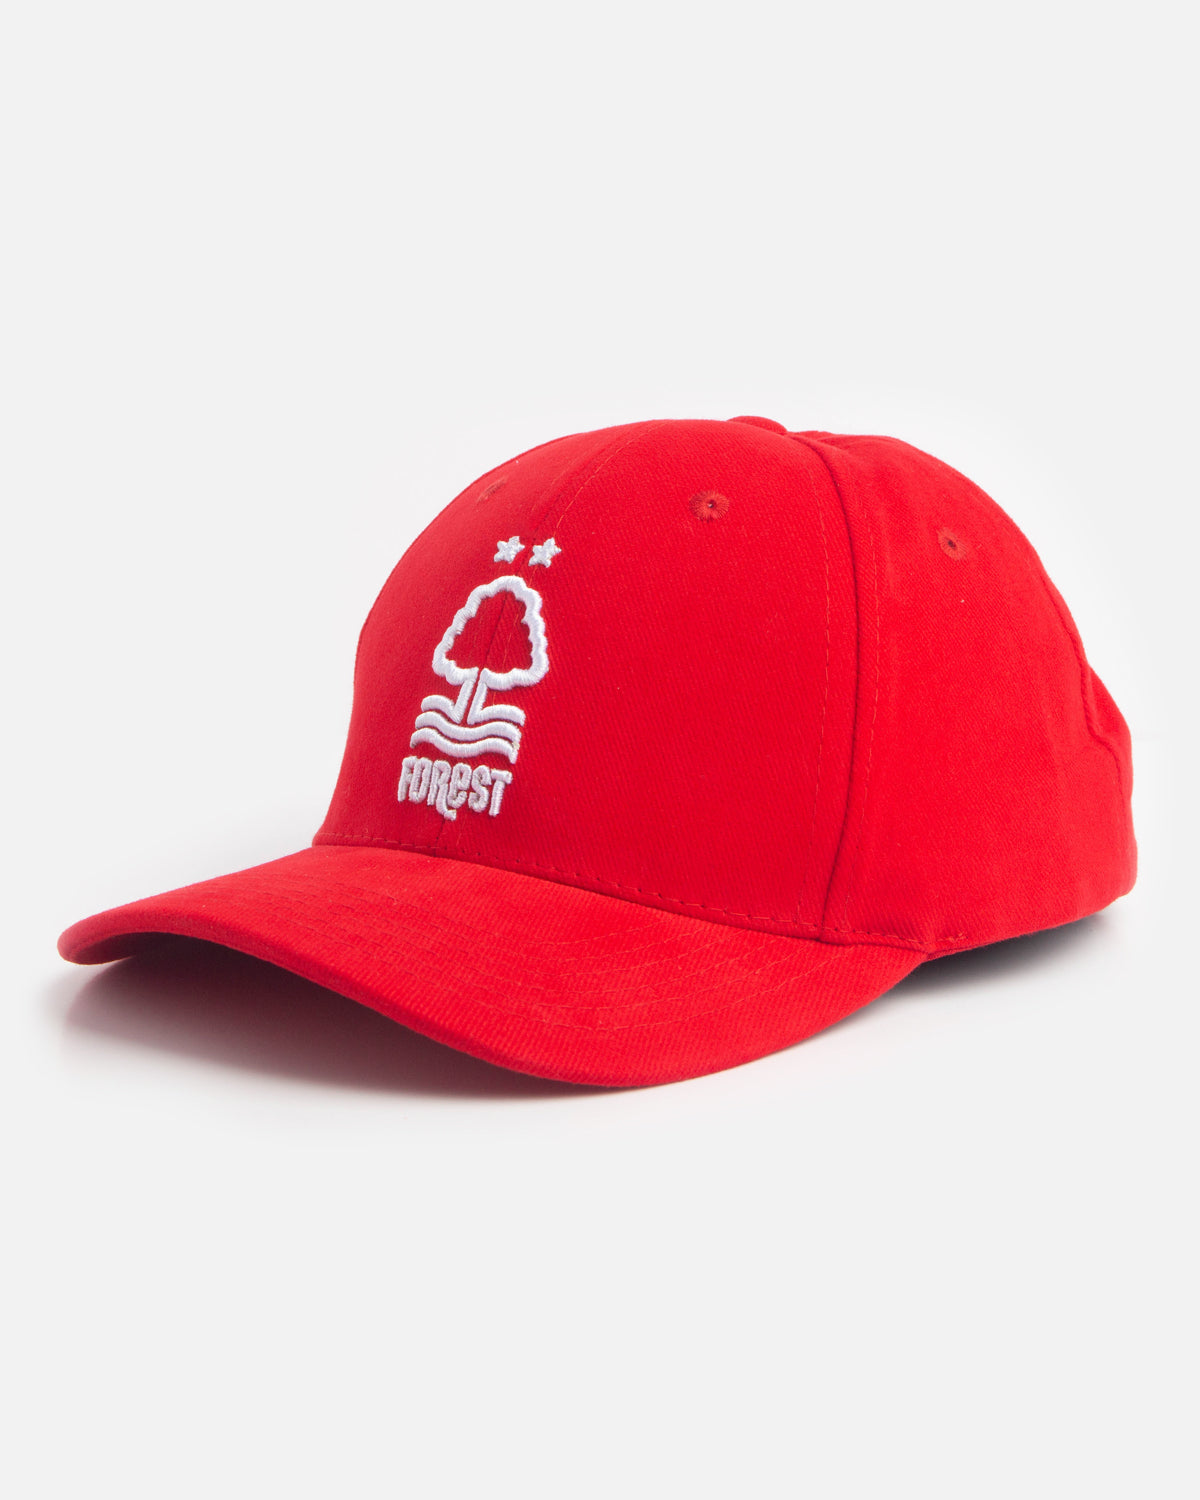 NFFC Junior Red Structured Cap